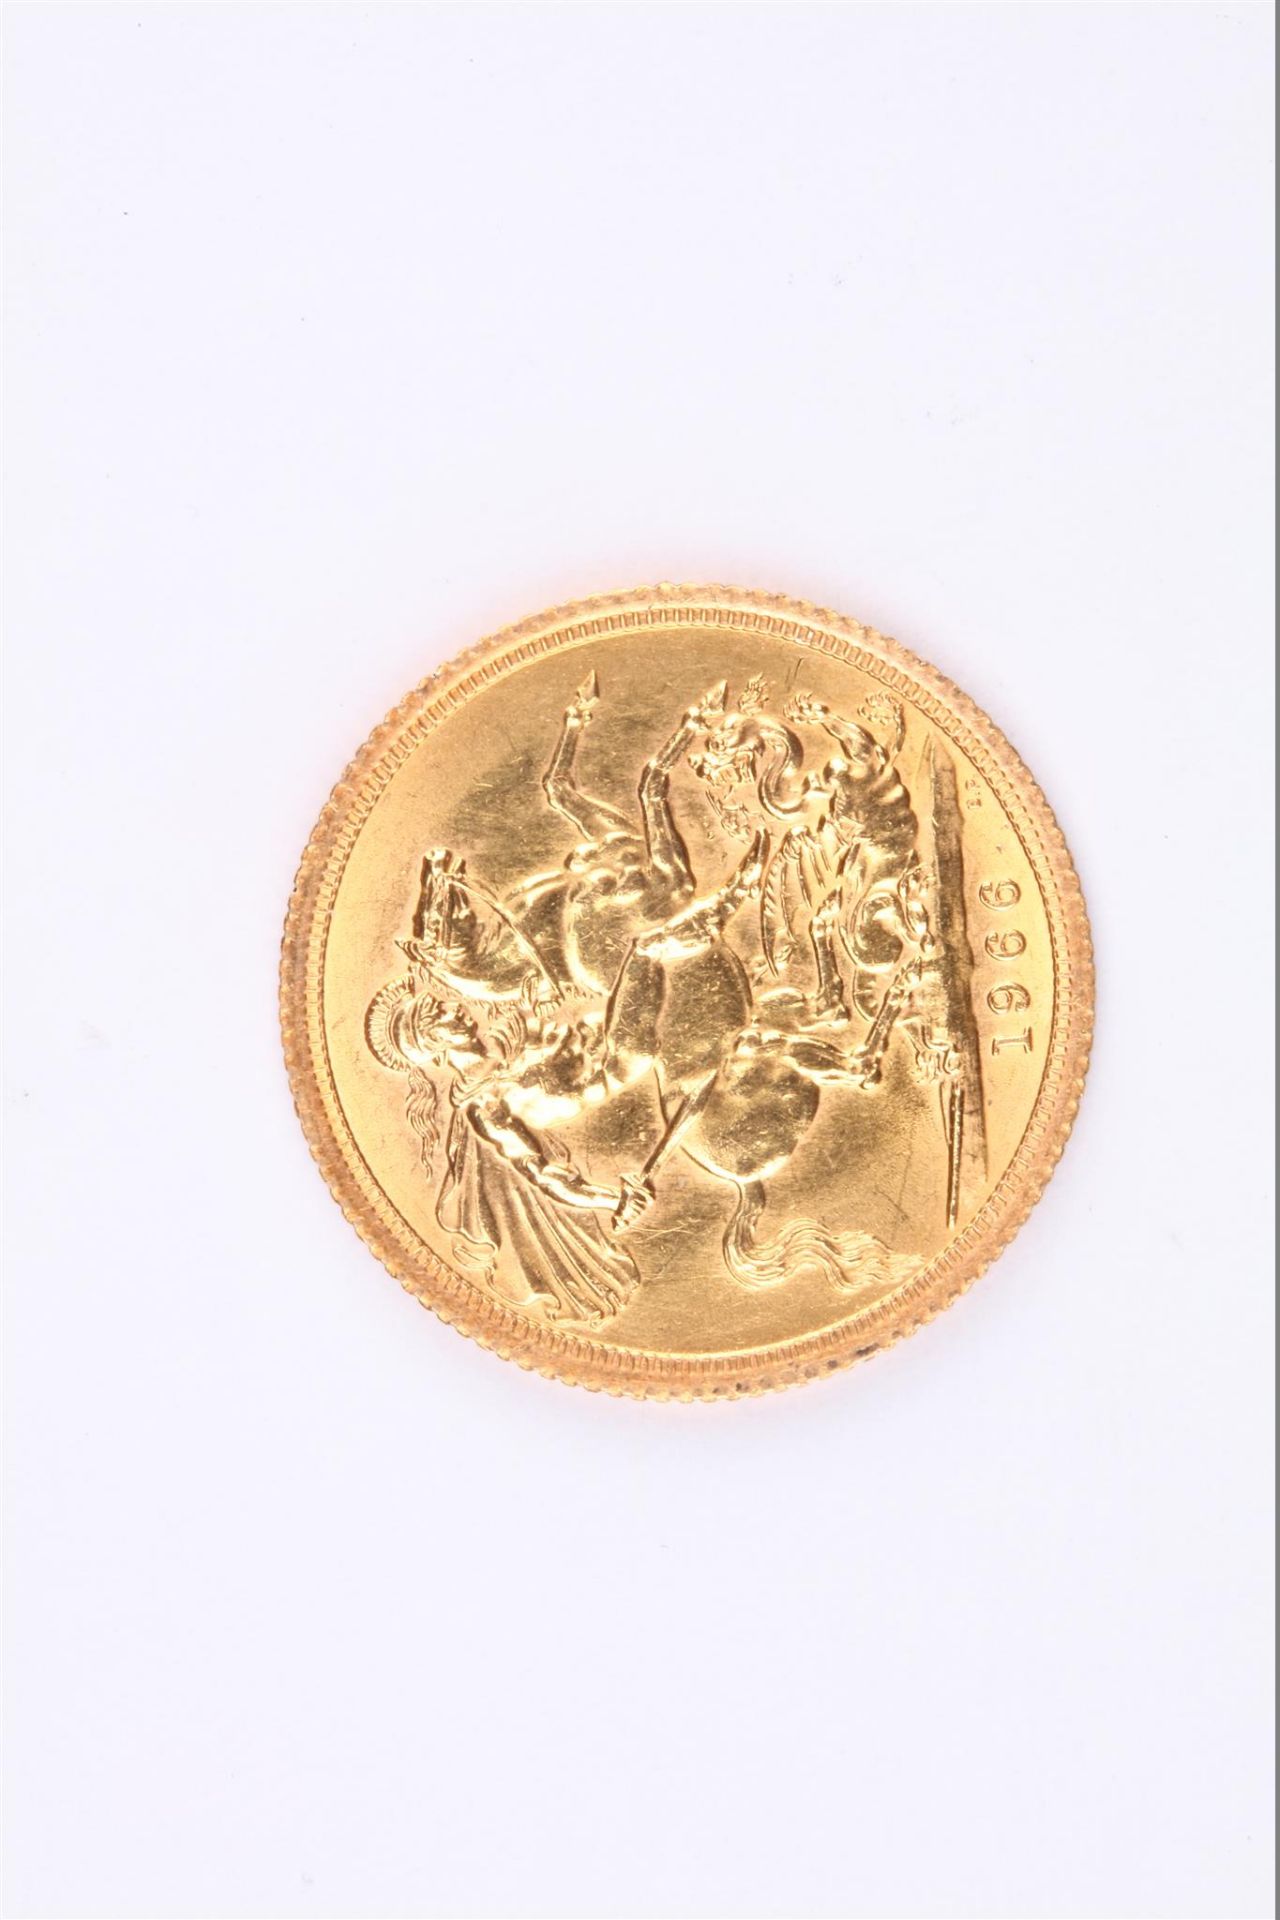 No VAT 1966 Gold Full Sovereign - Image 2 of 2